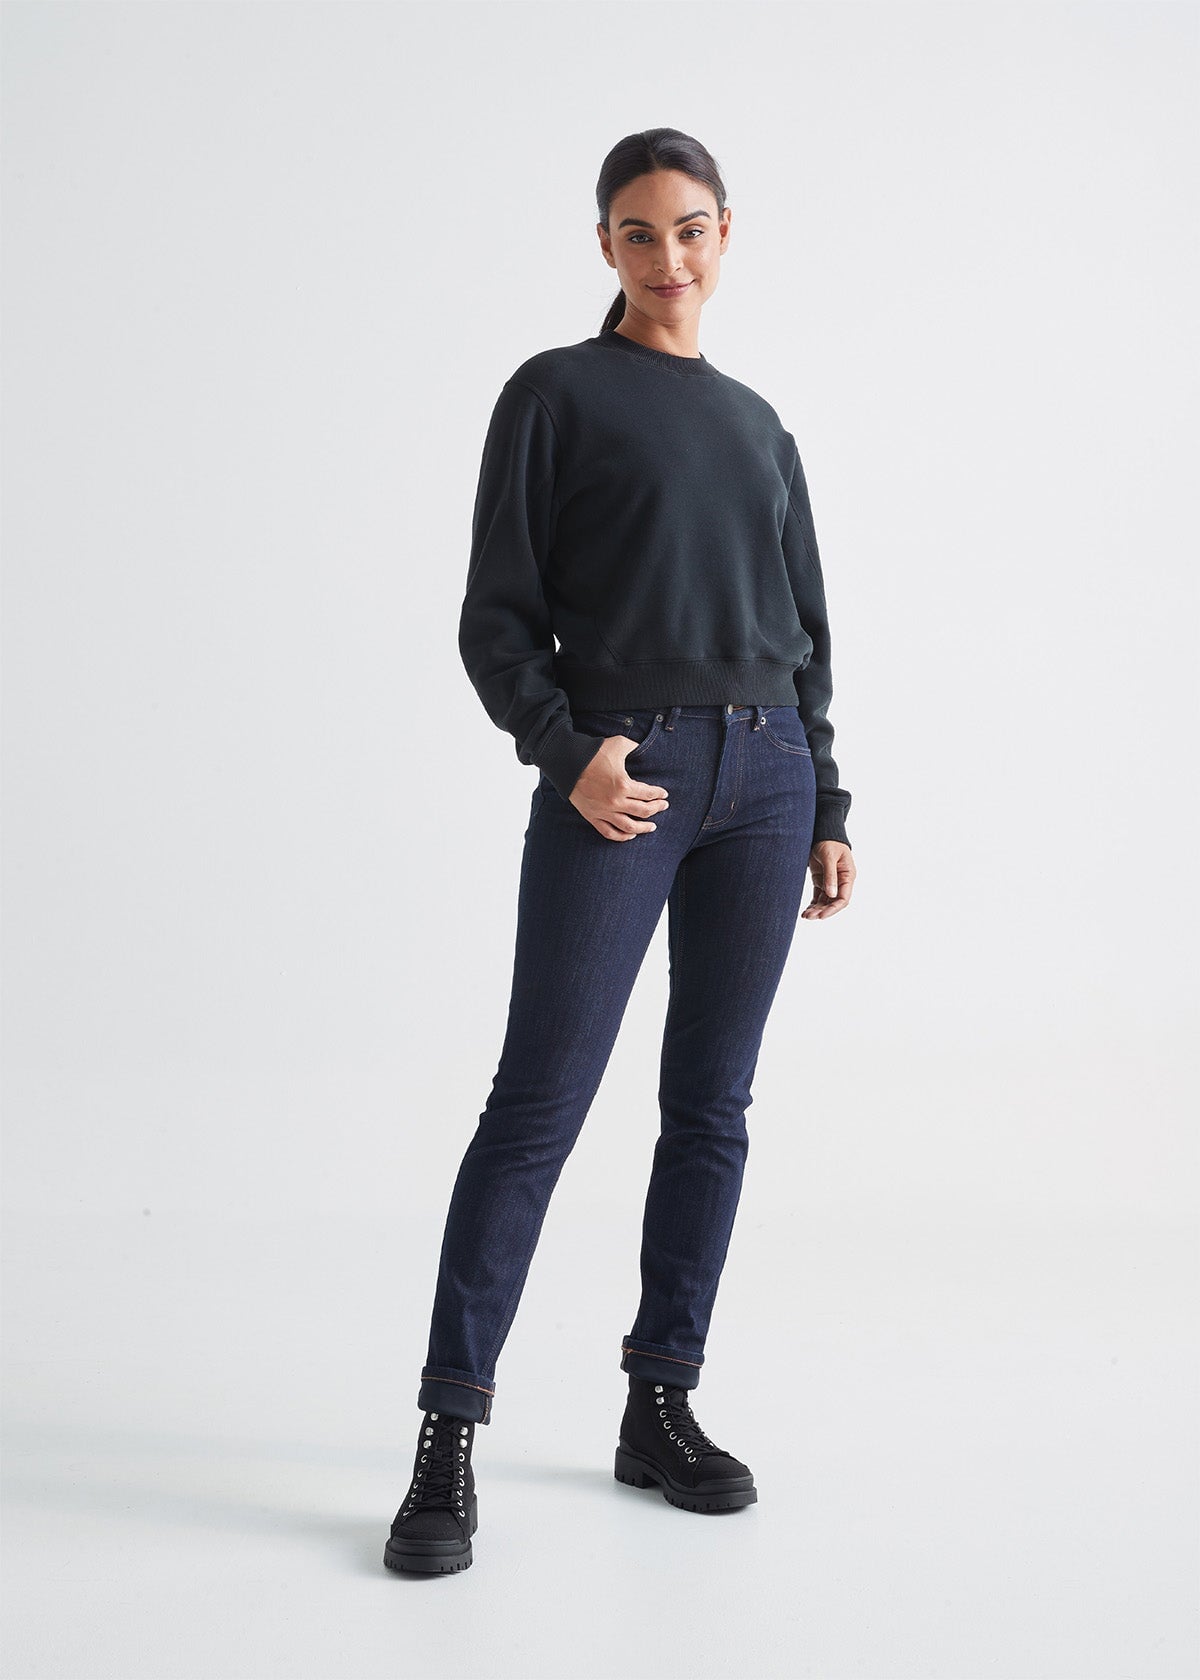 Woman Jeans Stretch Skinny Jean Large Size Spandex Denim Hip Slim Pants  Black Blue WomenTrouser (Color : Grey, Size : XXXX-Large) : :  Clothing, Shoes & Accessories